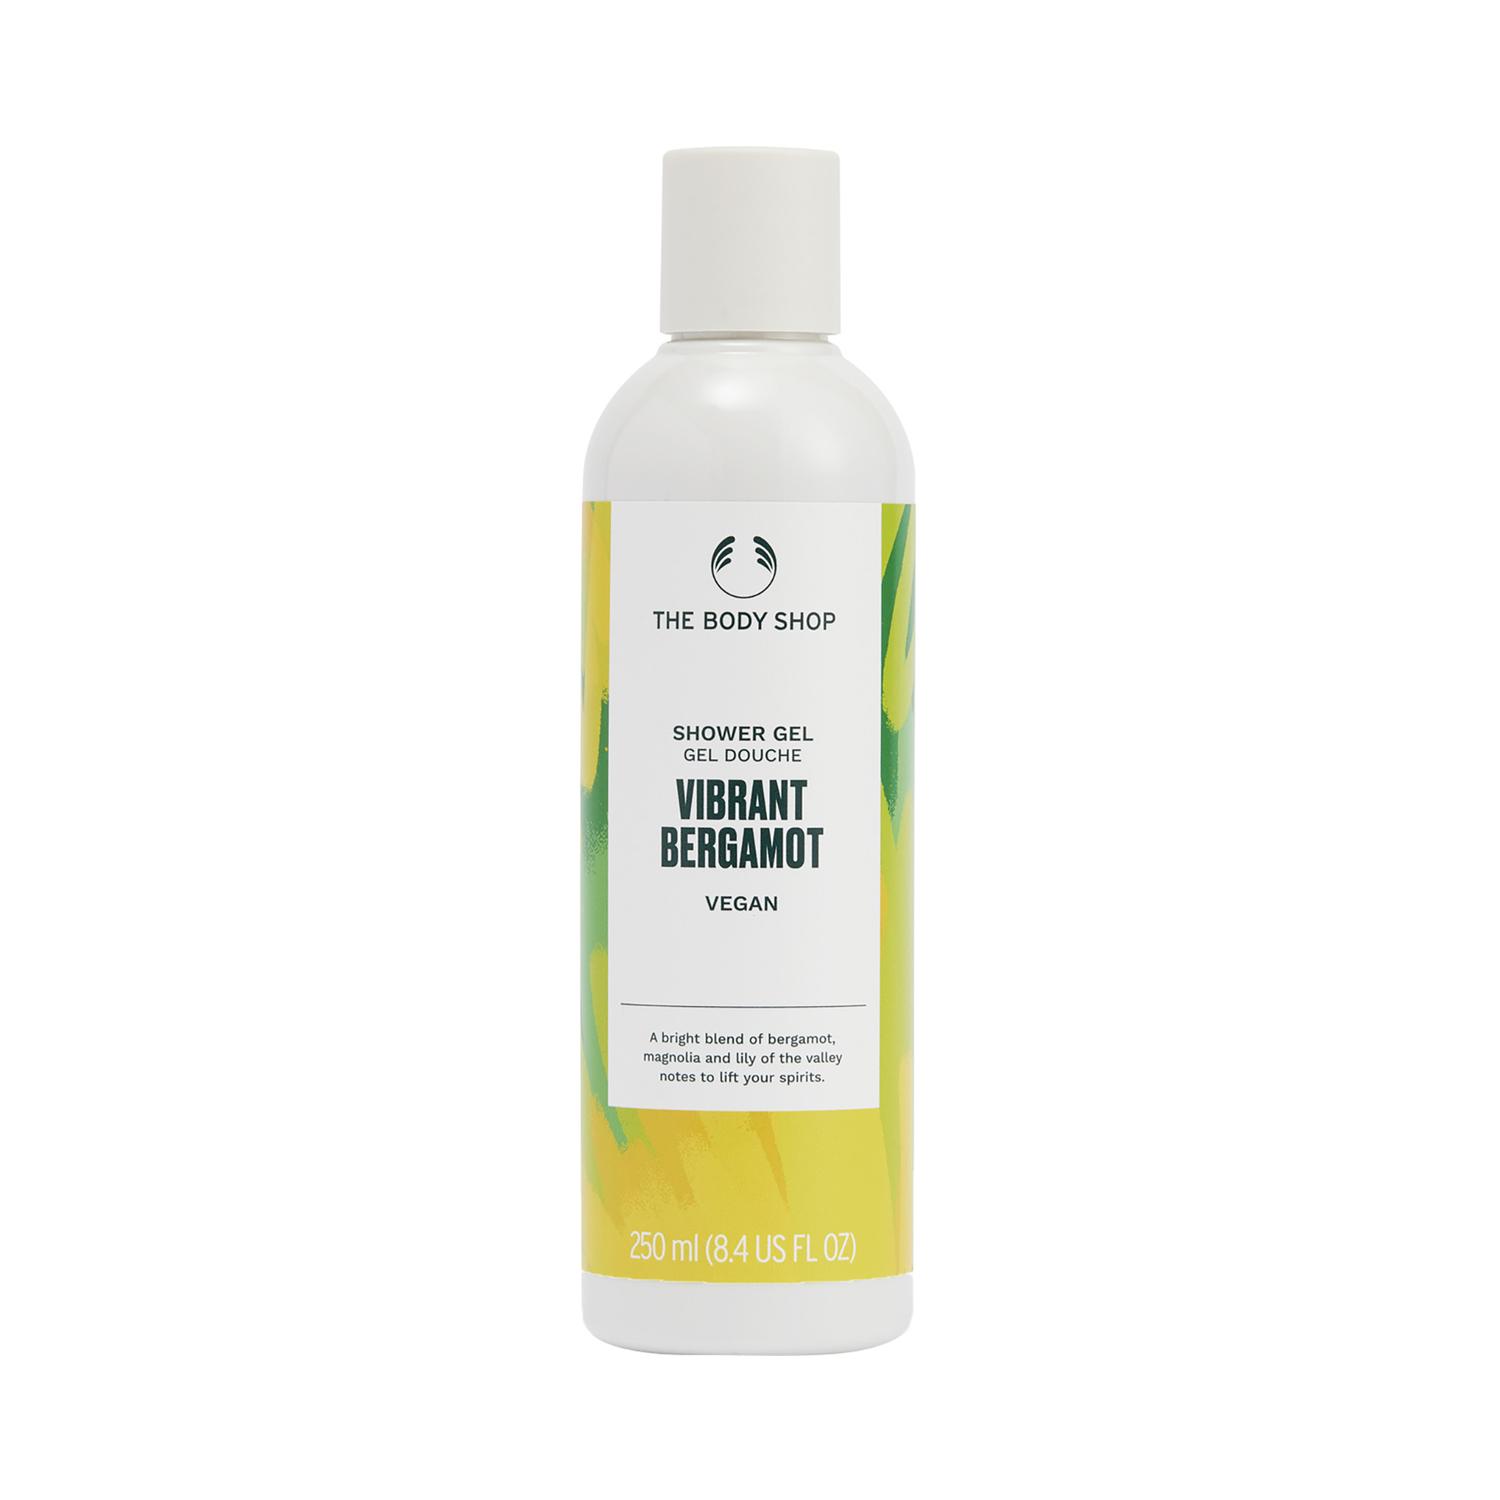 The Body Shop | The Body Shop Vibrant Bergamot Shower Gel (250 ml)